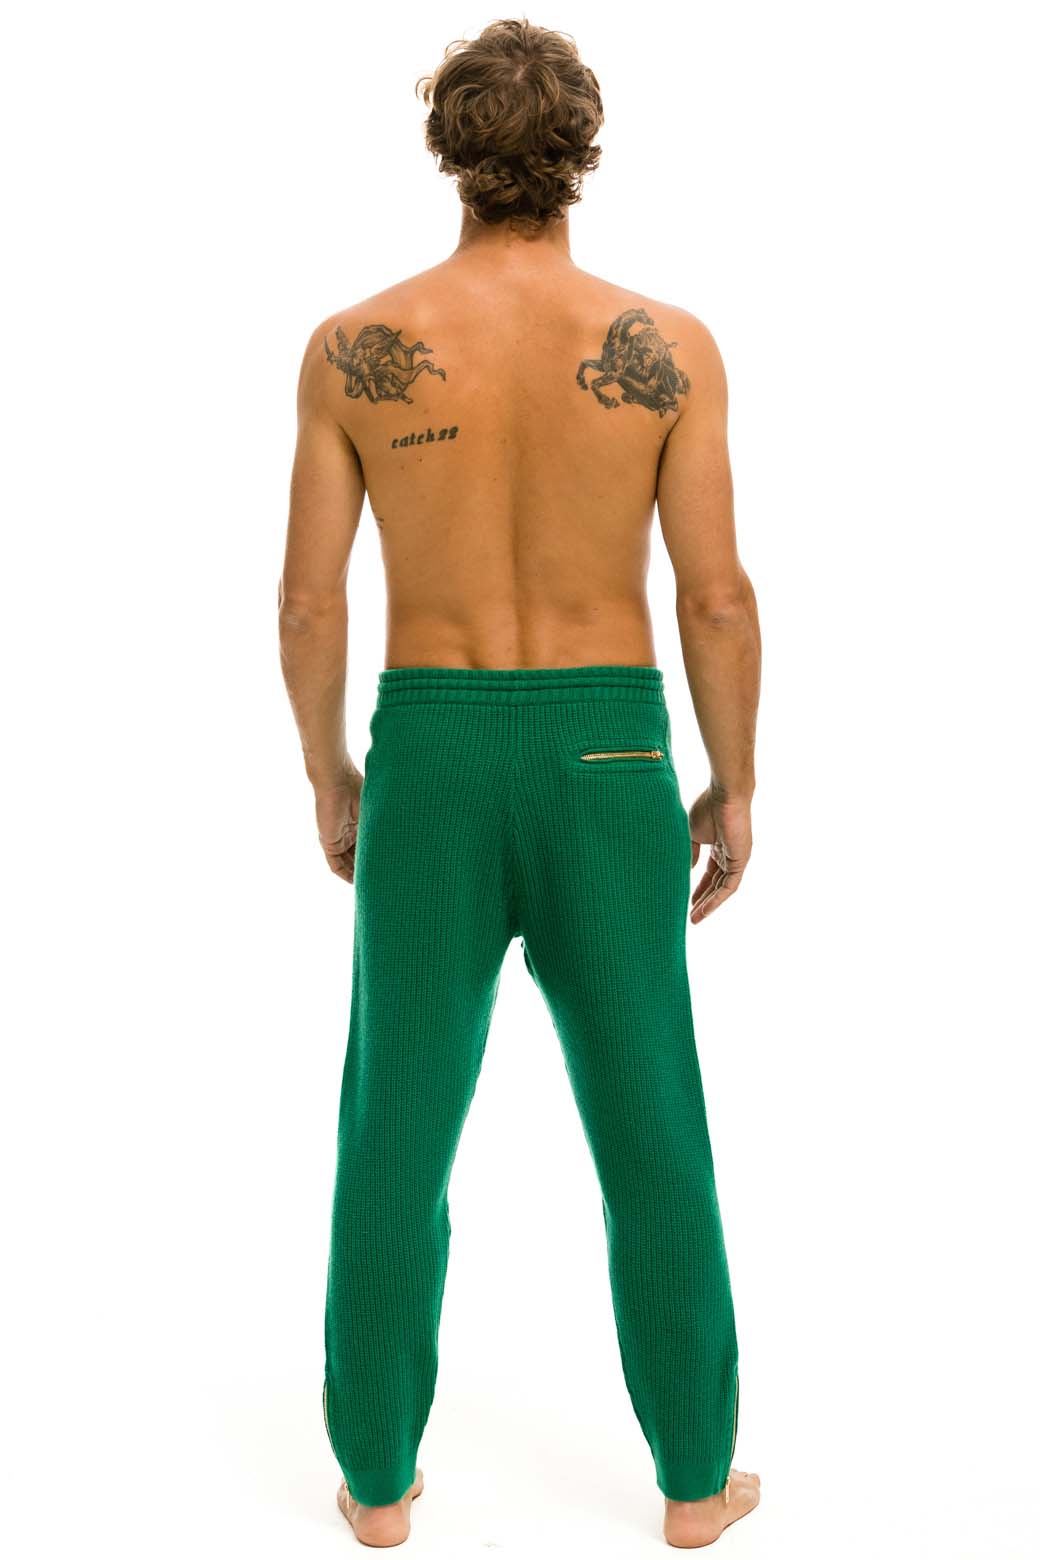 MKEING Men's Retro Loose Pants Urban Trend Do Old Fashion Big Size  Drawstring Pants 28 at Amazon Men's Clothing store